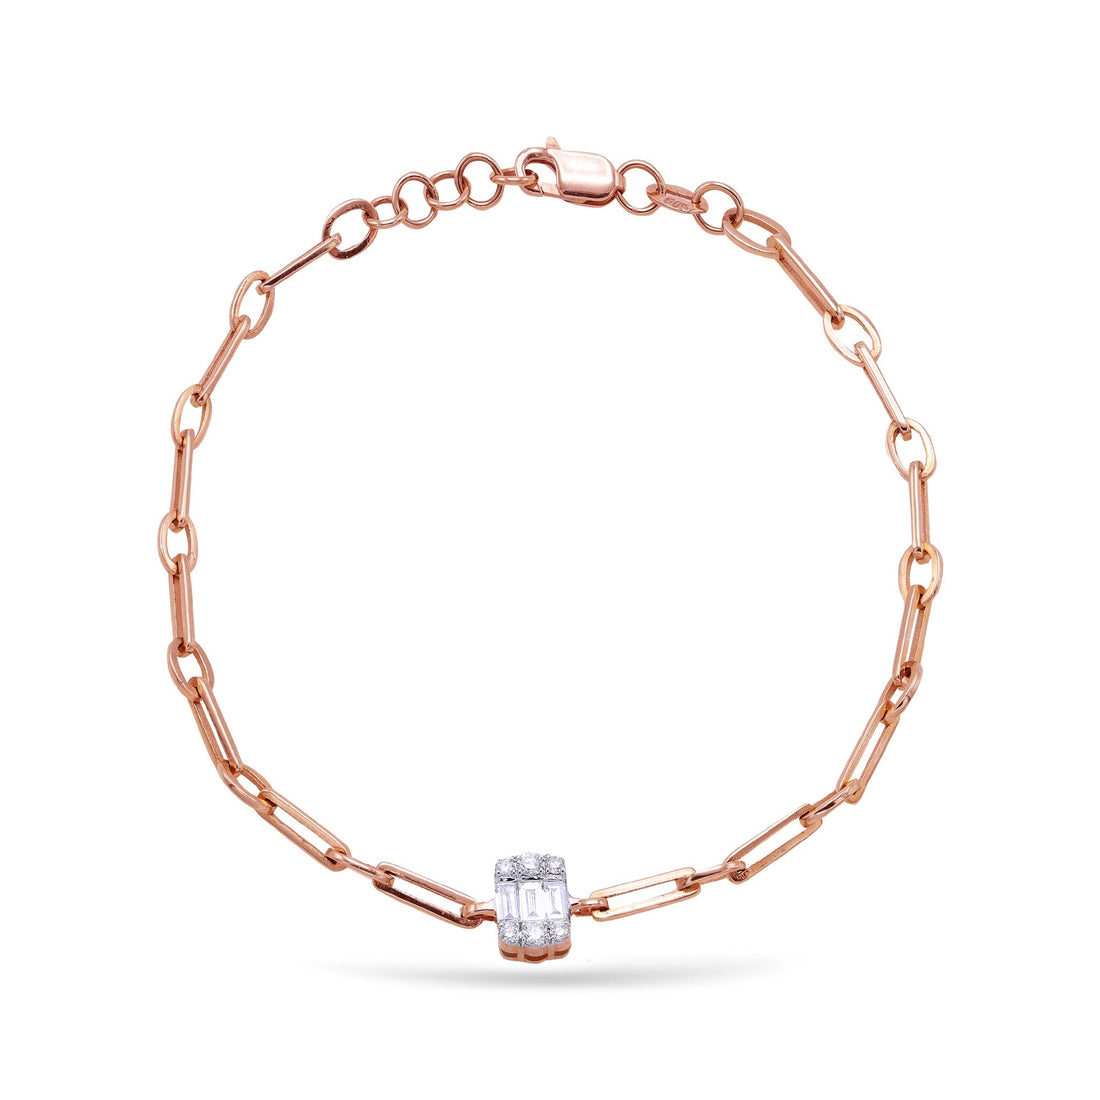 Gilda Jewelry Chains | Diamond Bracelet | 0.17 Cts. | 14K Gold - Rose / 18 cm / Diamonds - bracelet Zengoda Shop online